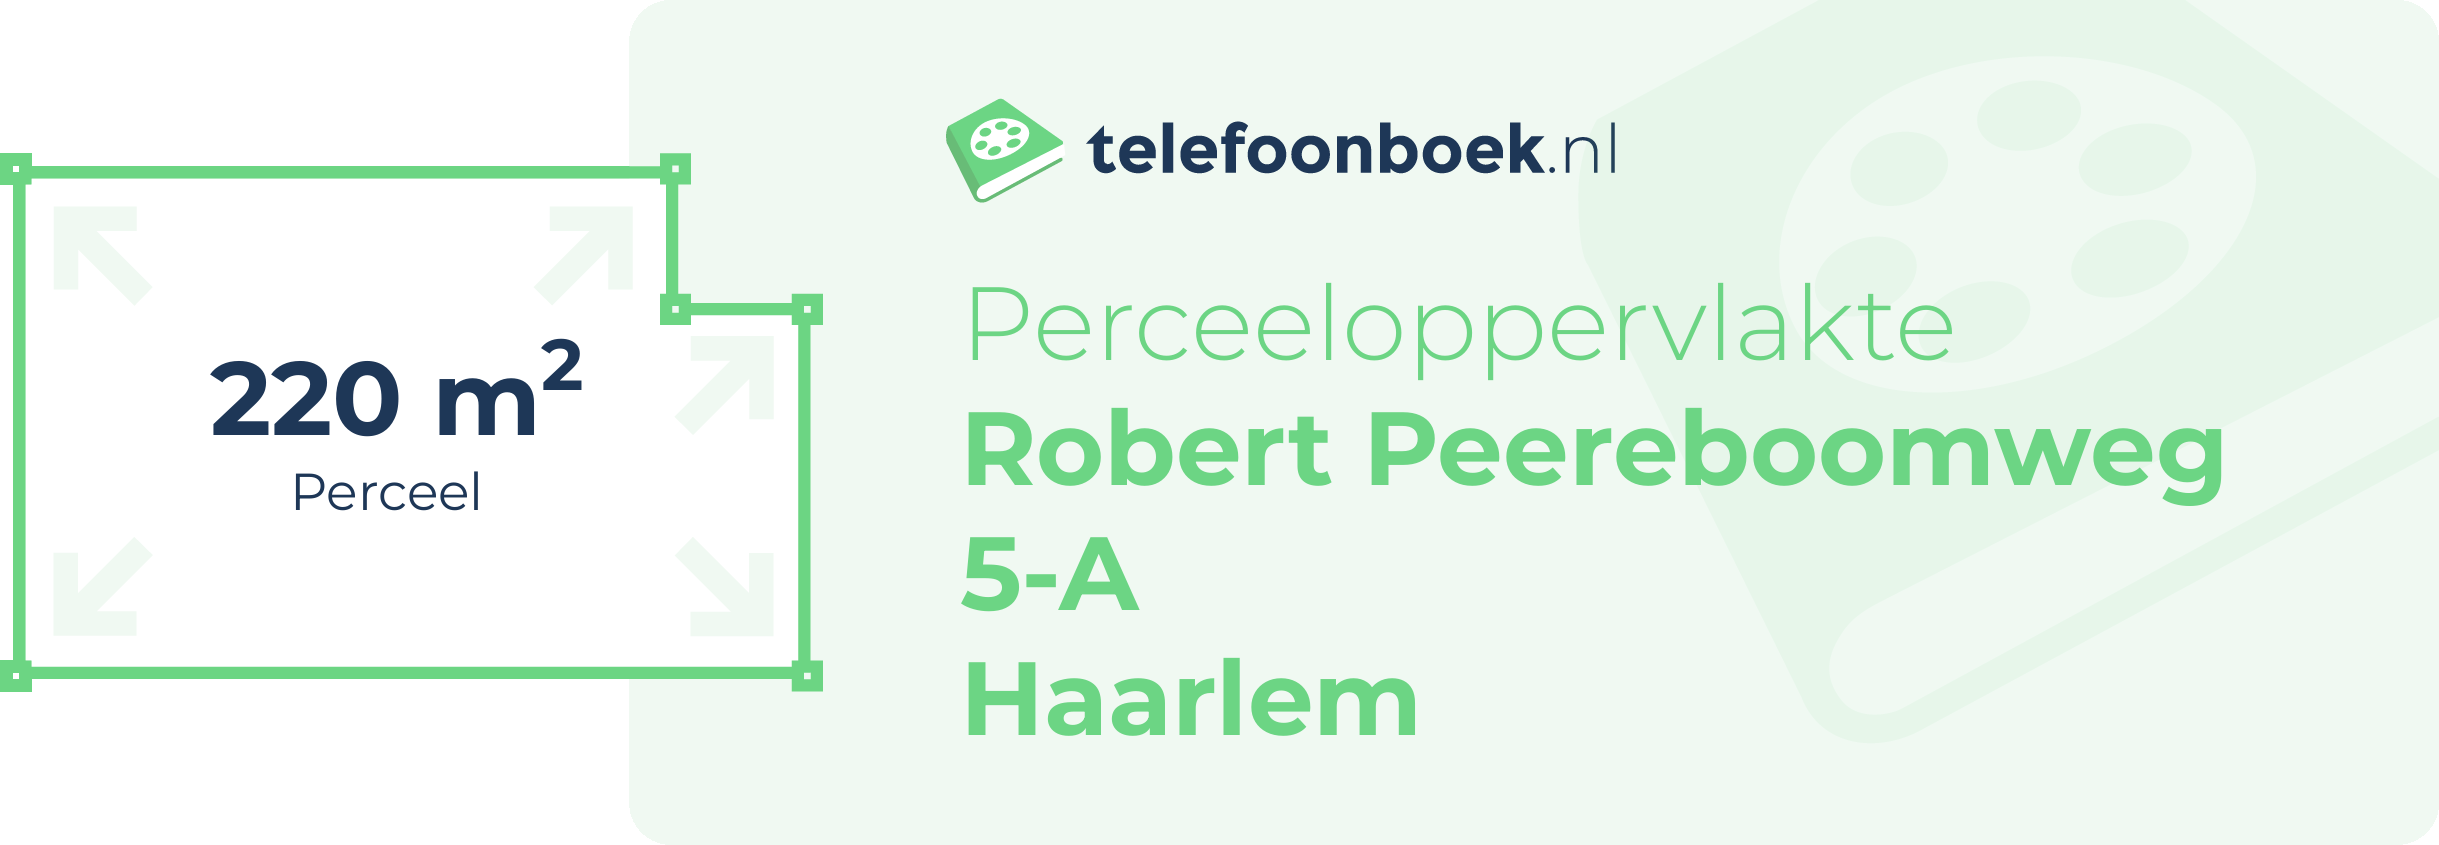 Perceeloppervlakte Robert Peereboomweg 5-A Haarlem